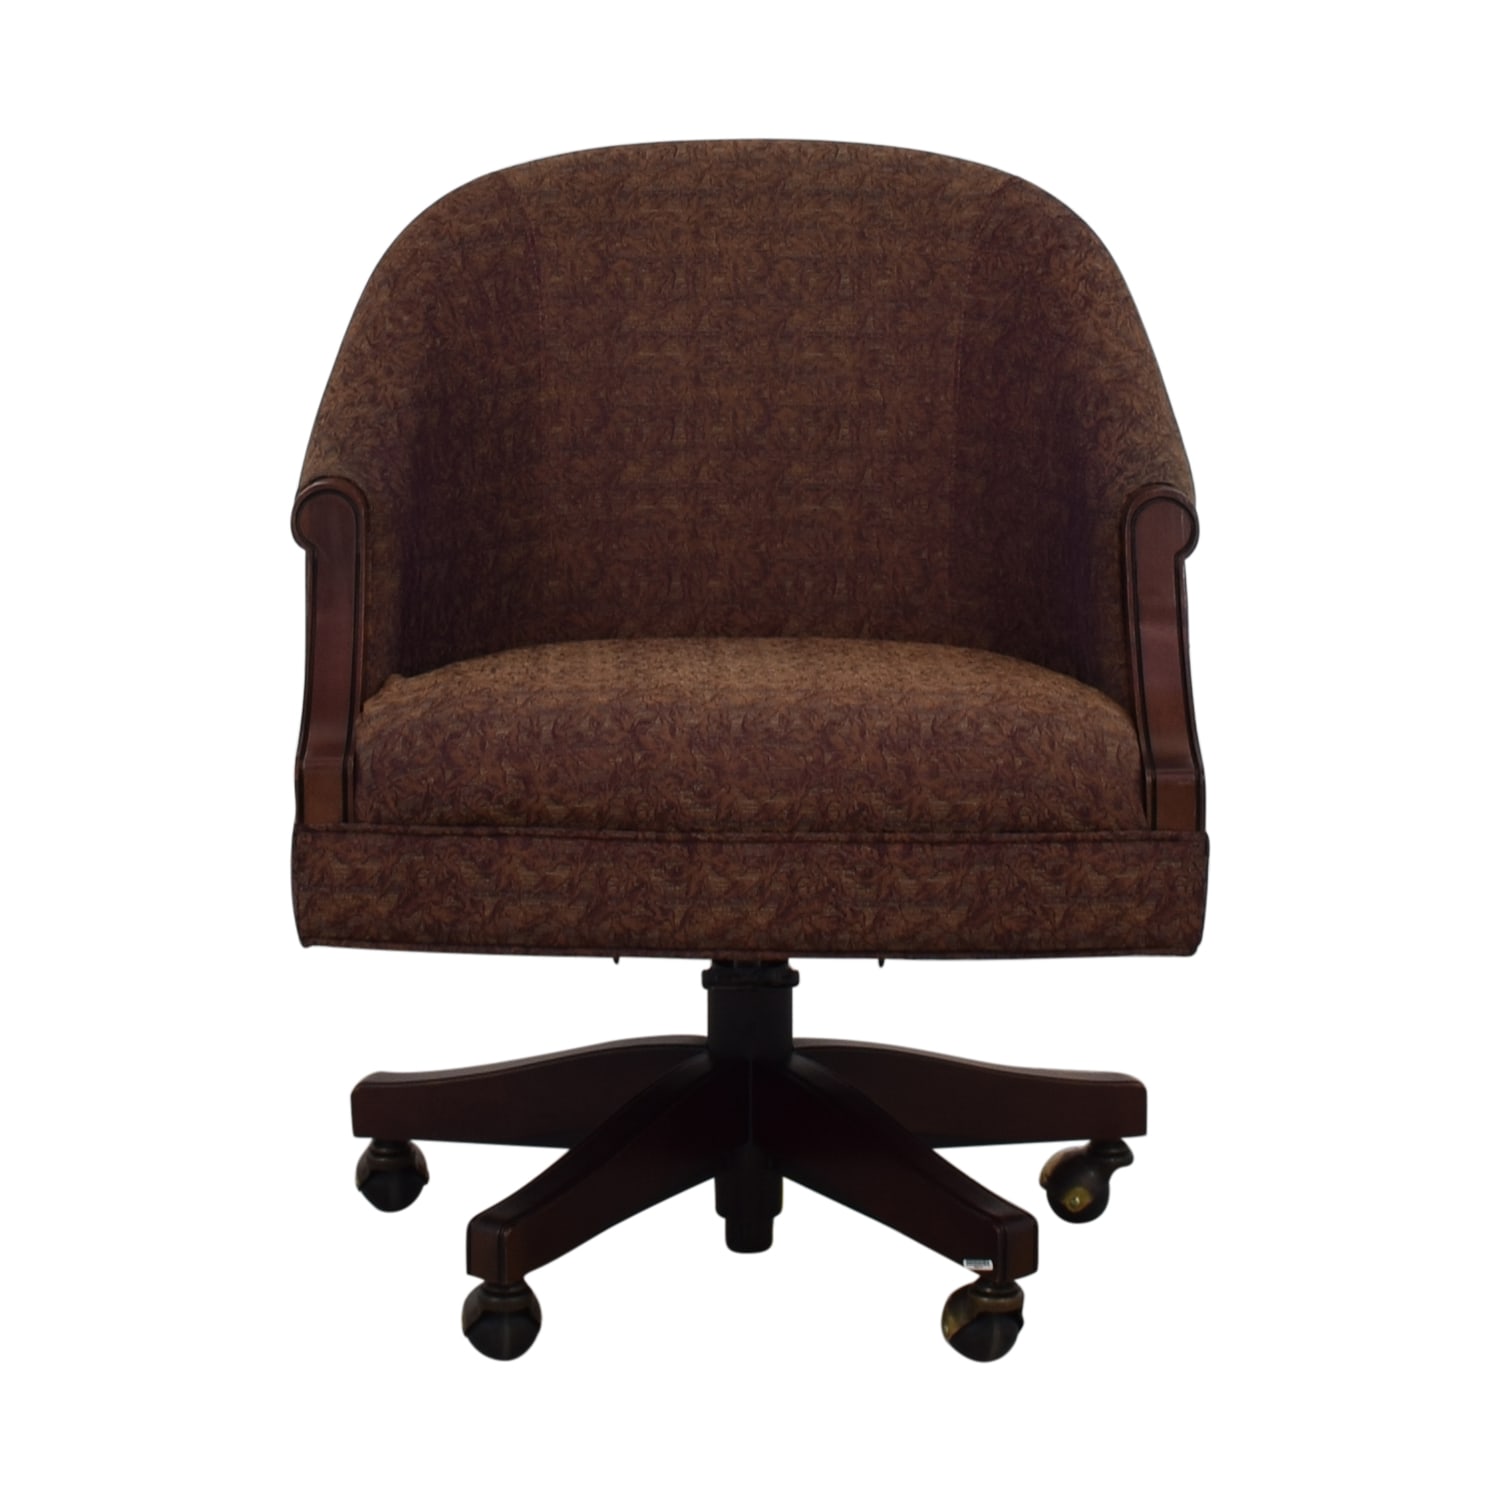 shop Kimball Kimball Independence Newcastle Swivel Chair online